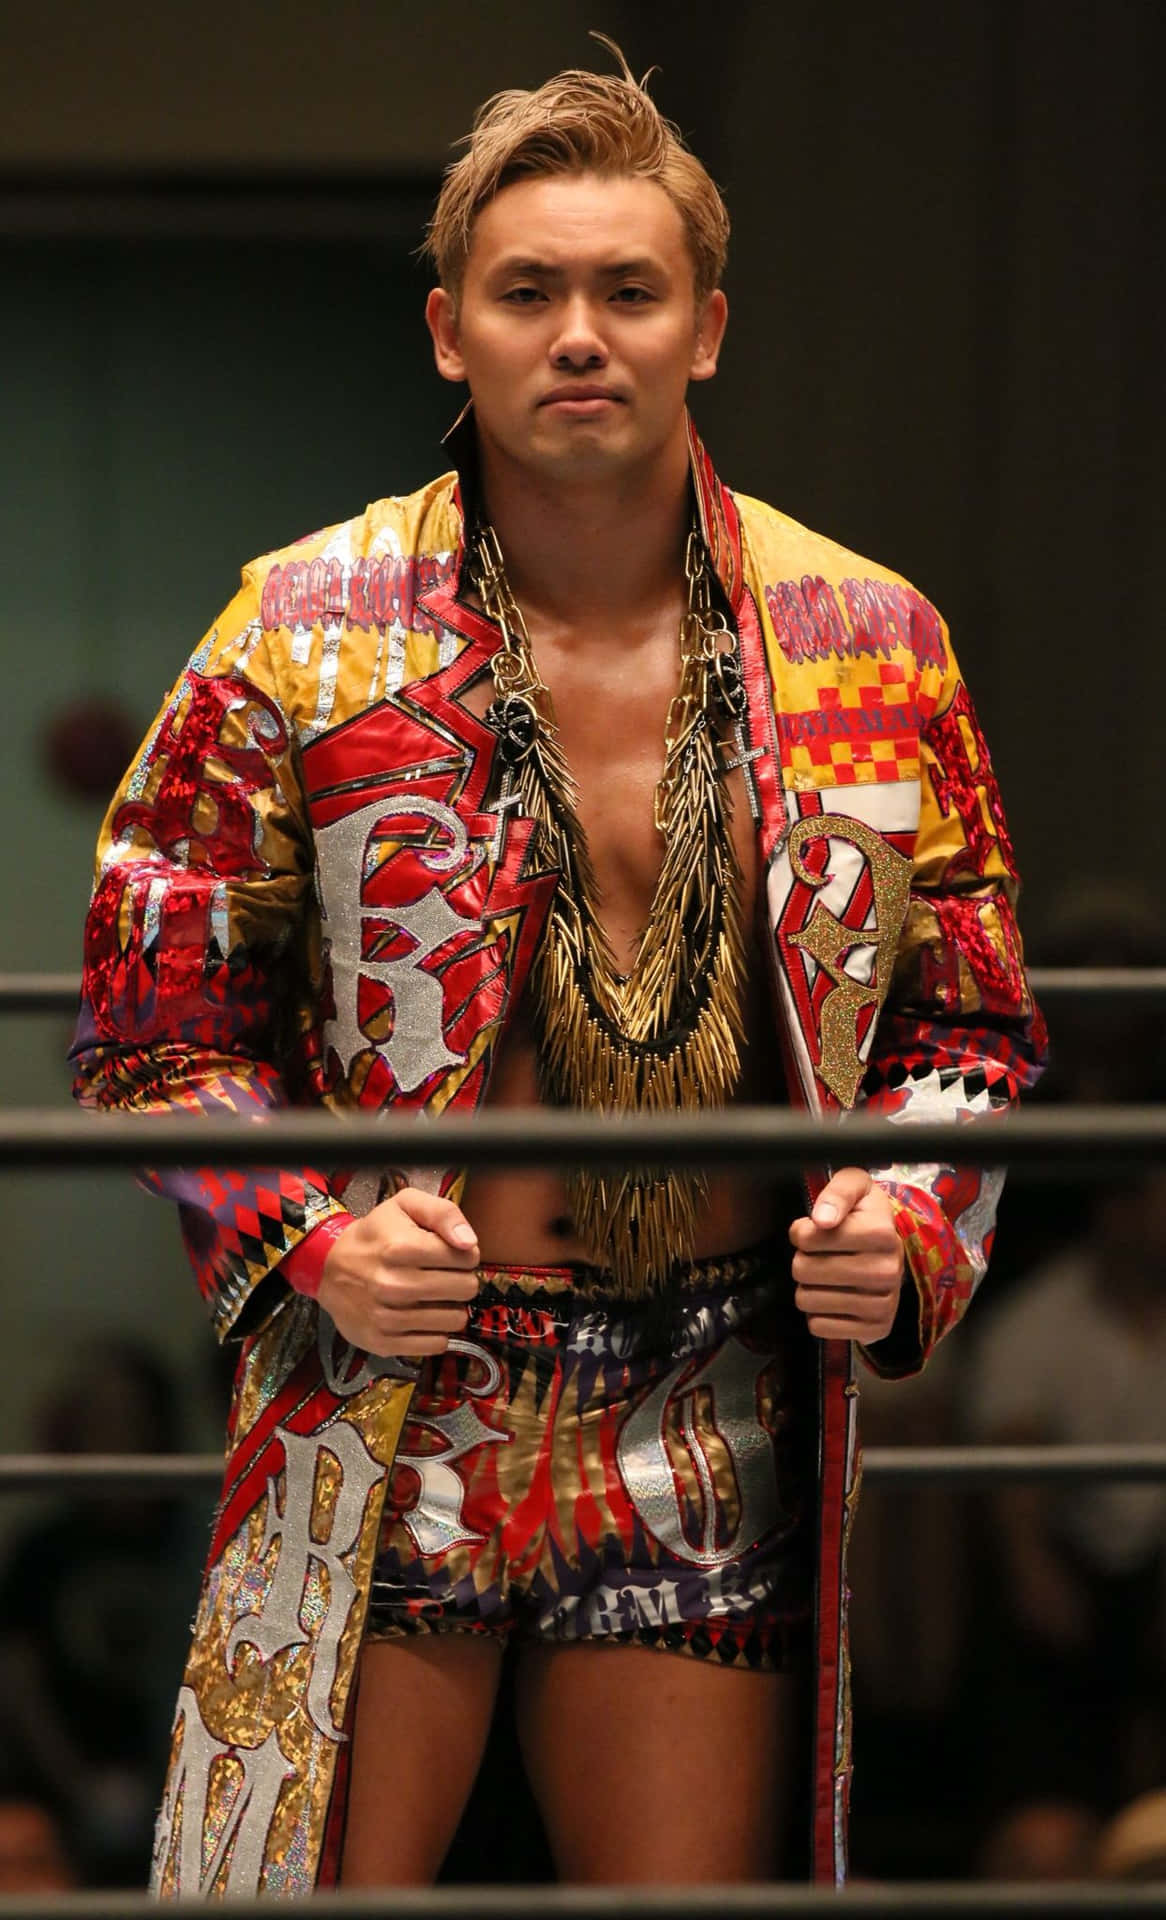 Kazuchikaokada, Professionista Del Wrestling Giapponese Sfondo